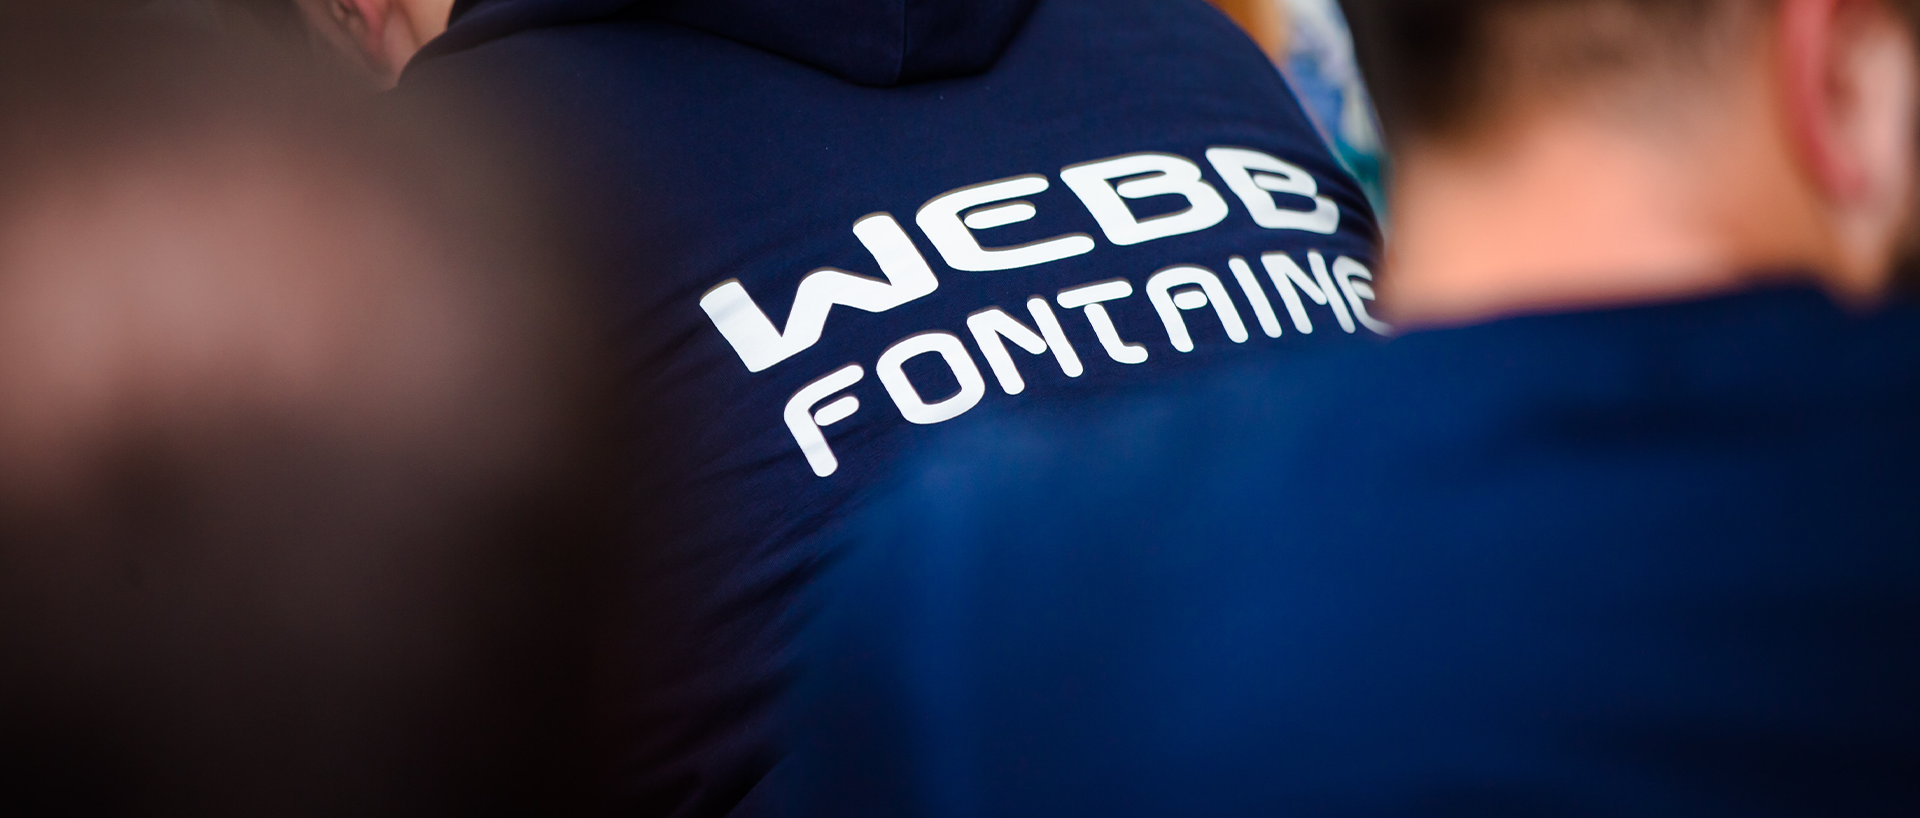 Webb Fontaine